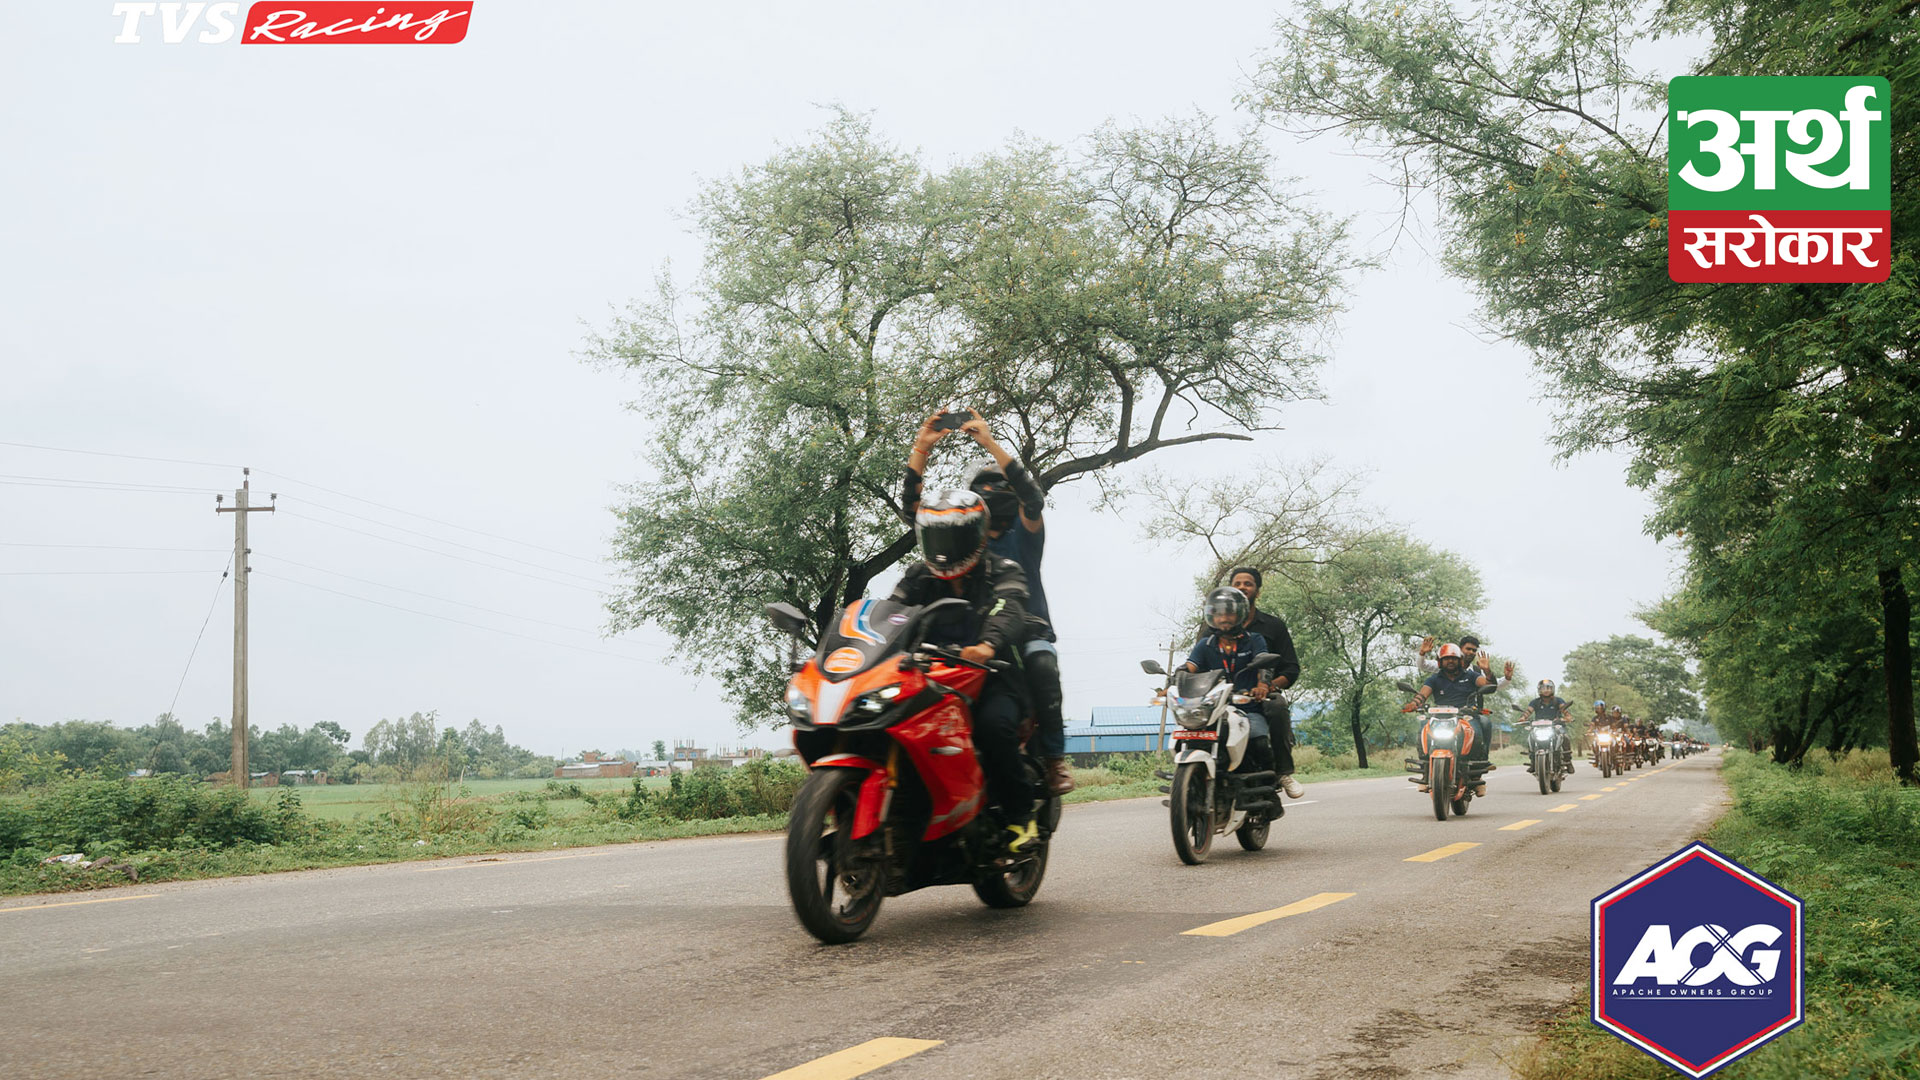 TVS organized AOG with 35 riders in Biratnagar